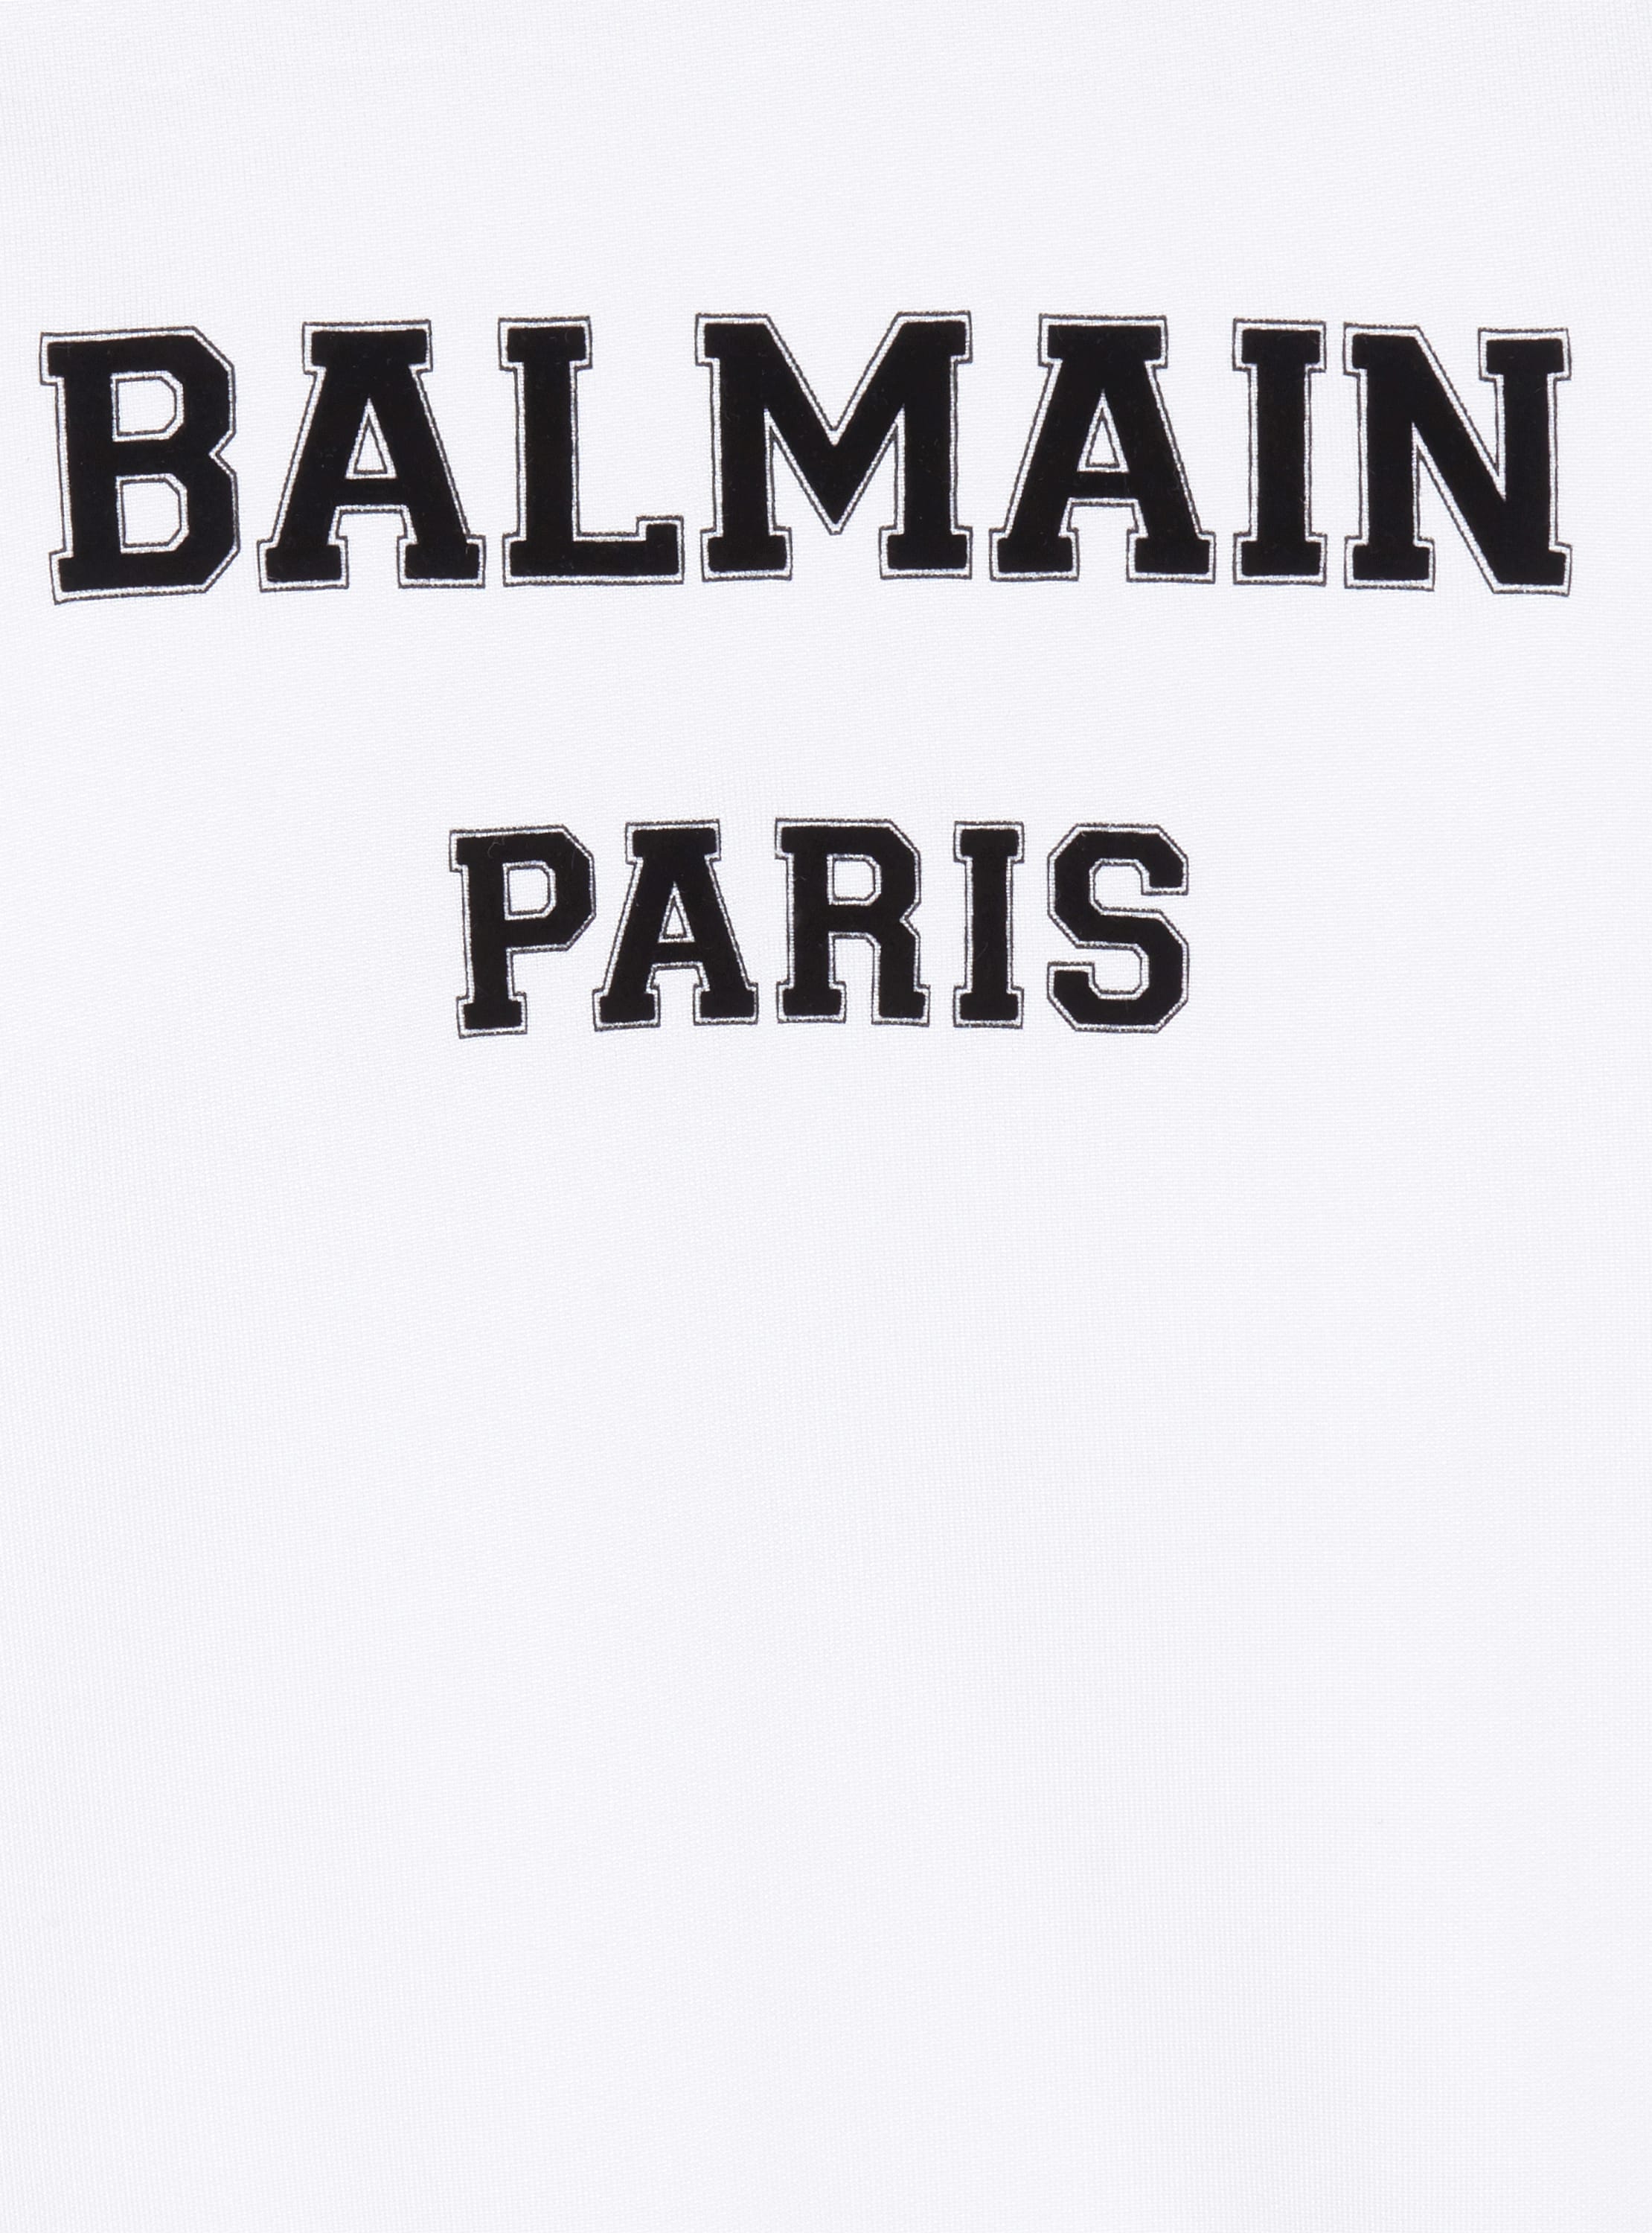 Balmain Paris sweatshirt